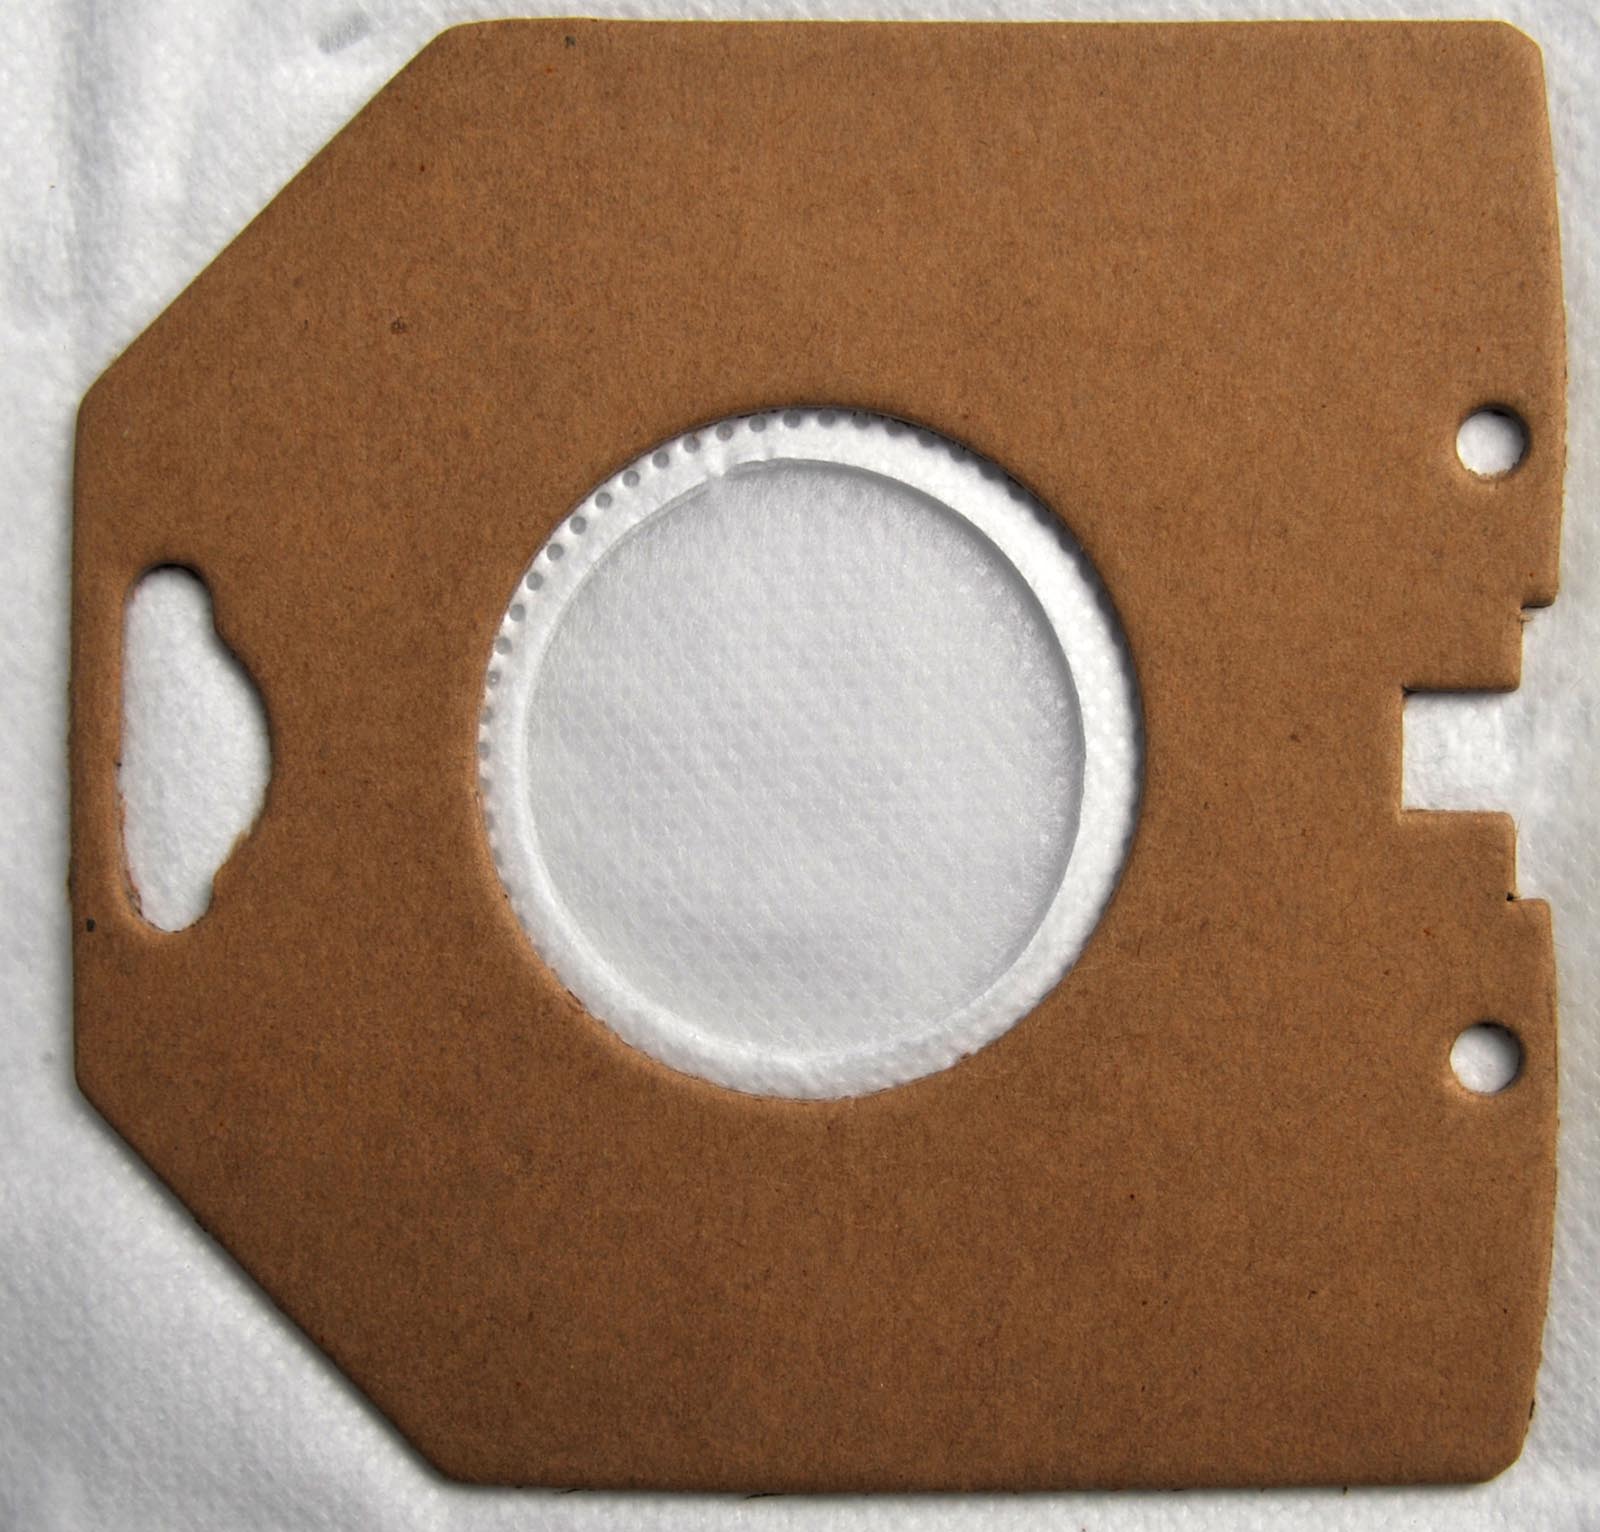 10 Staubsaugerbeutel kompatibel mit KARSTADT Genial BS 8811, BS 8822, 10 Staubbeutel + 2 Mikro-Filter, kompatibel mit Staubsaugerbeutel Swirl PH84